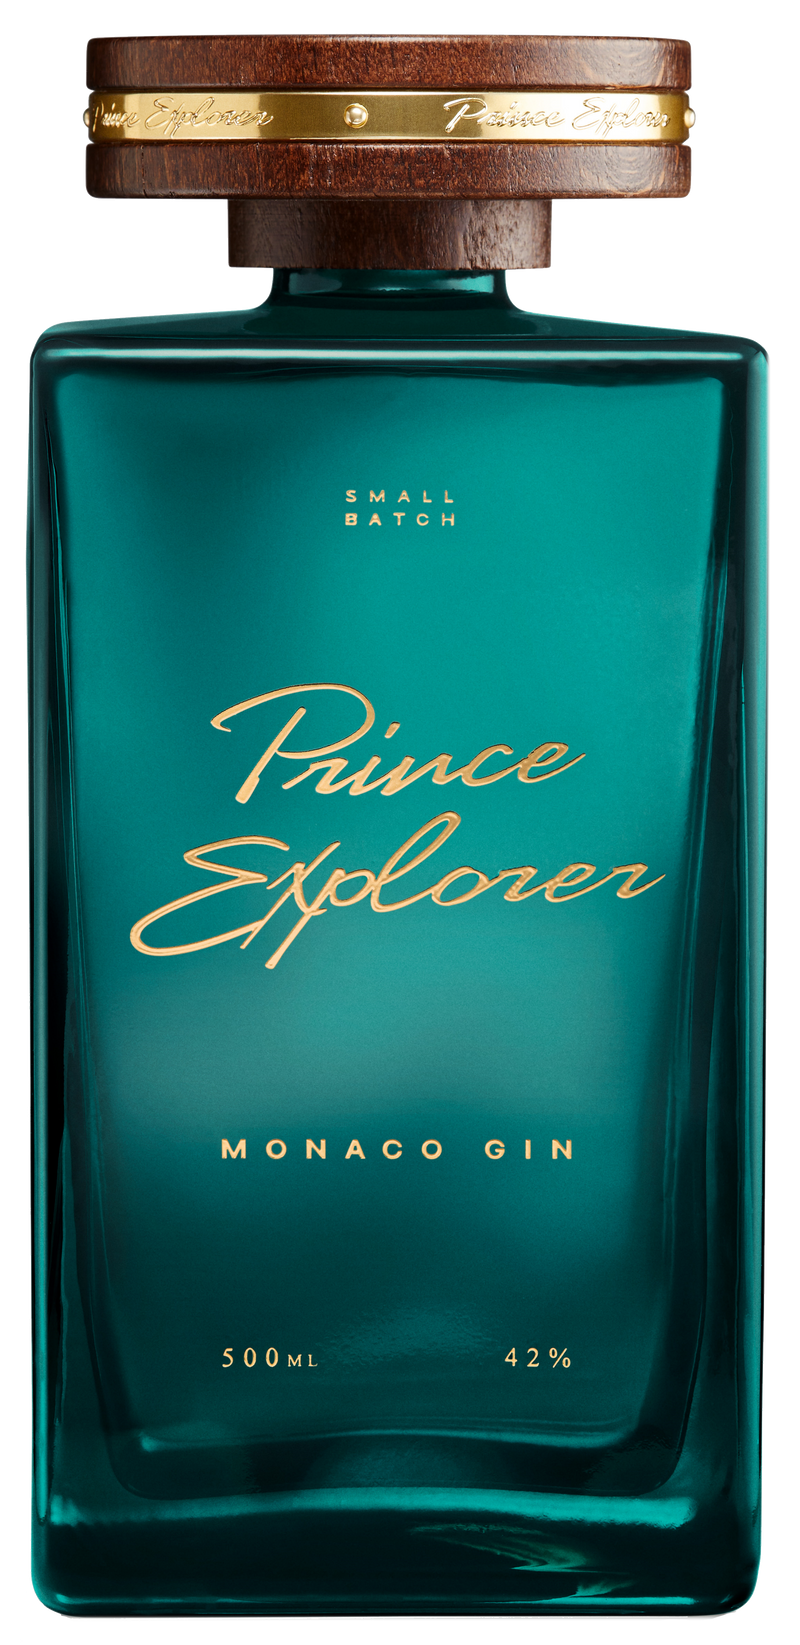 Prince Explorer MONACO GIN - 0,5 Liter - 42% VOL